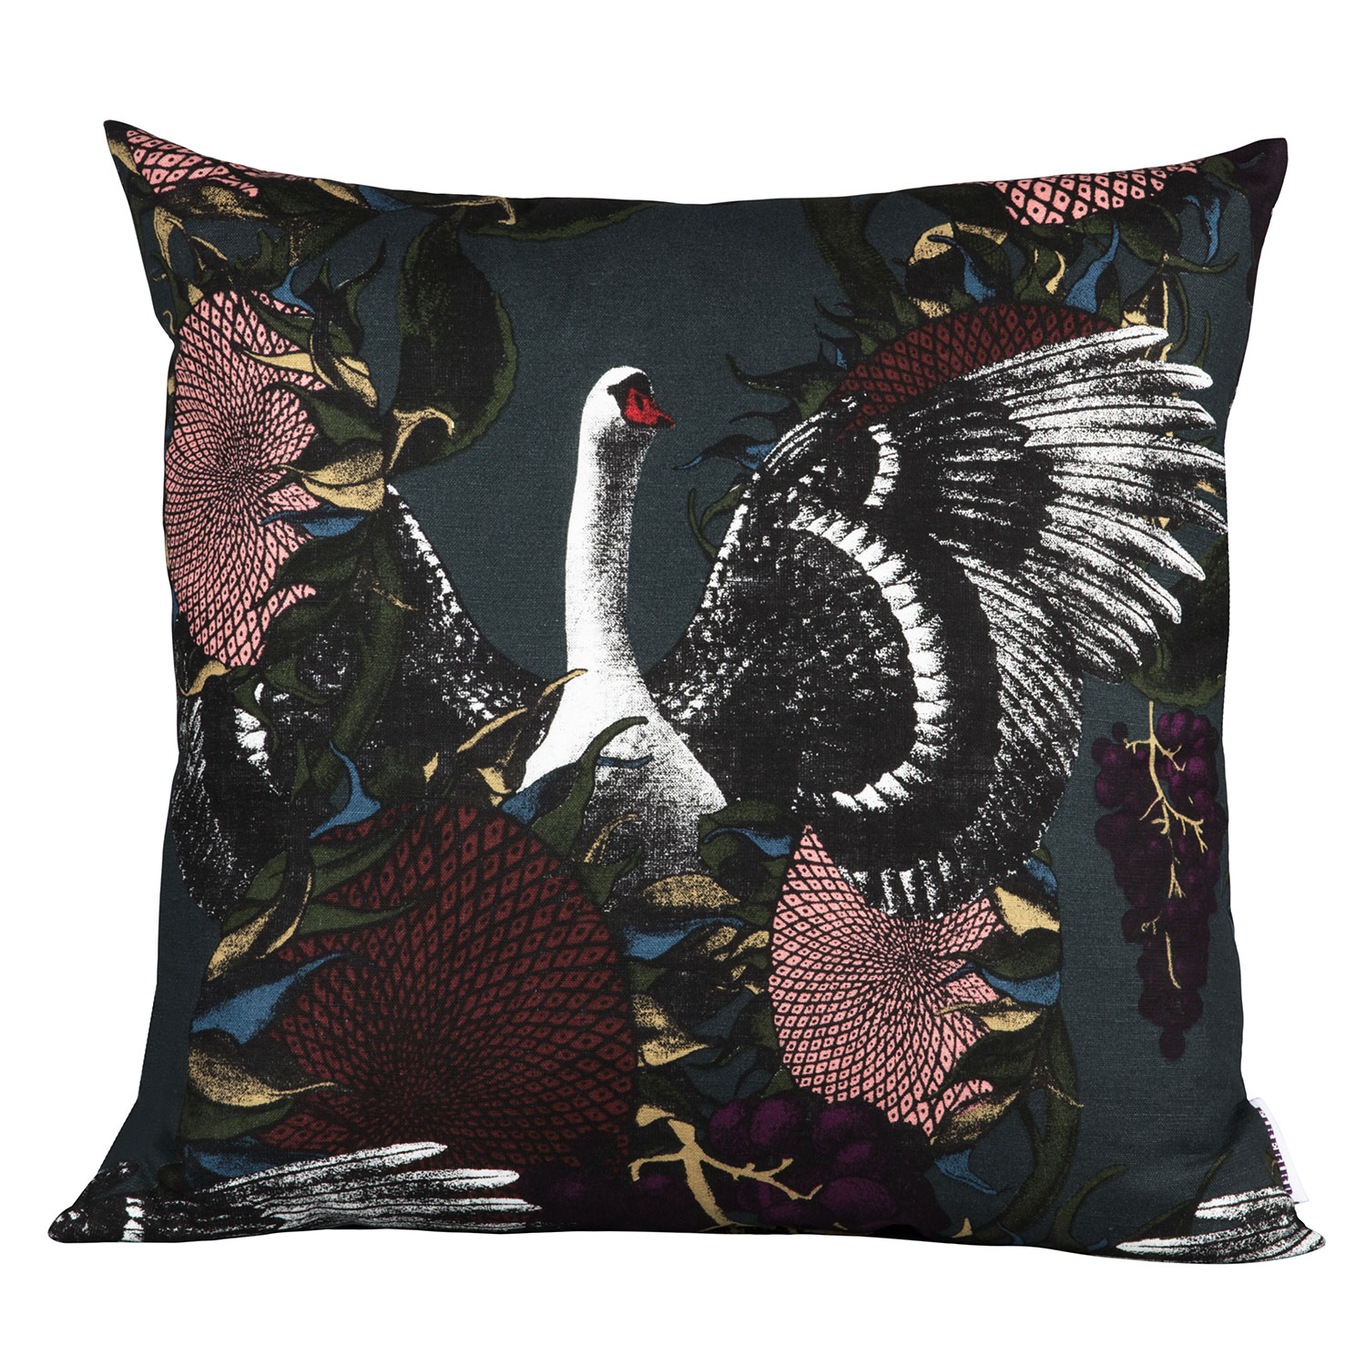 Firebird Cushion Cover Cotton / Linen 60x60 cm